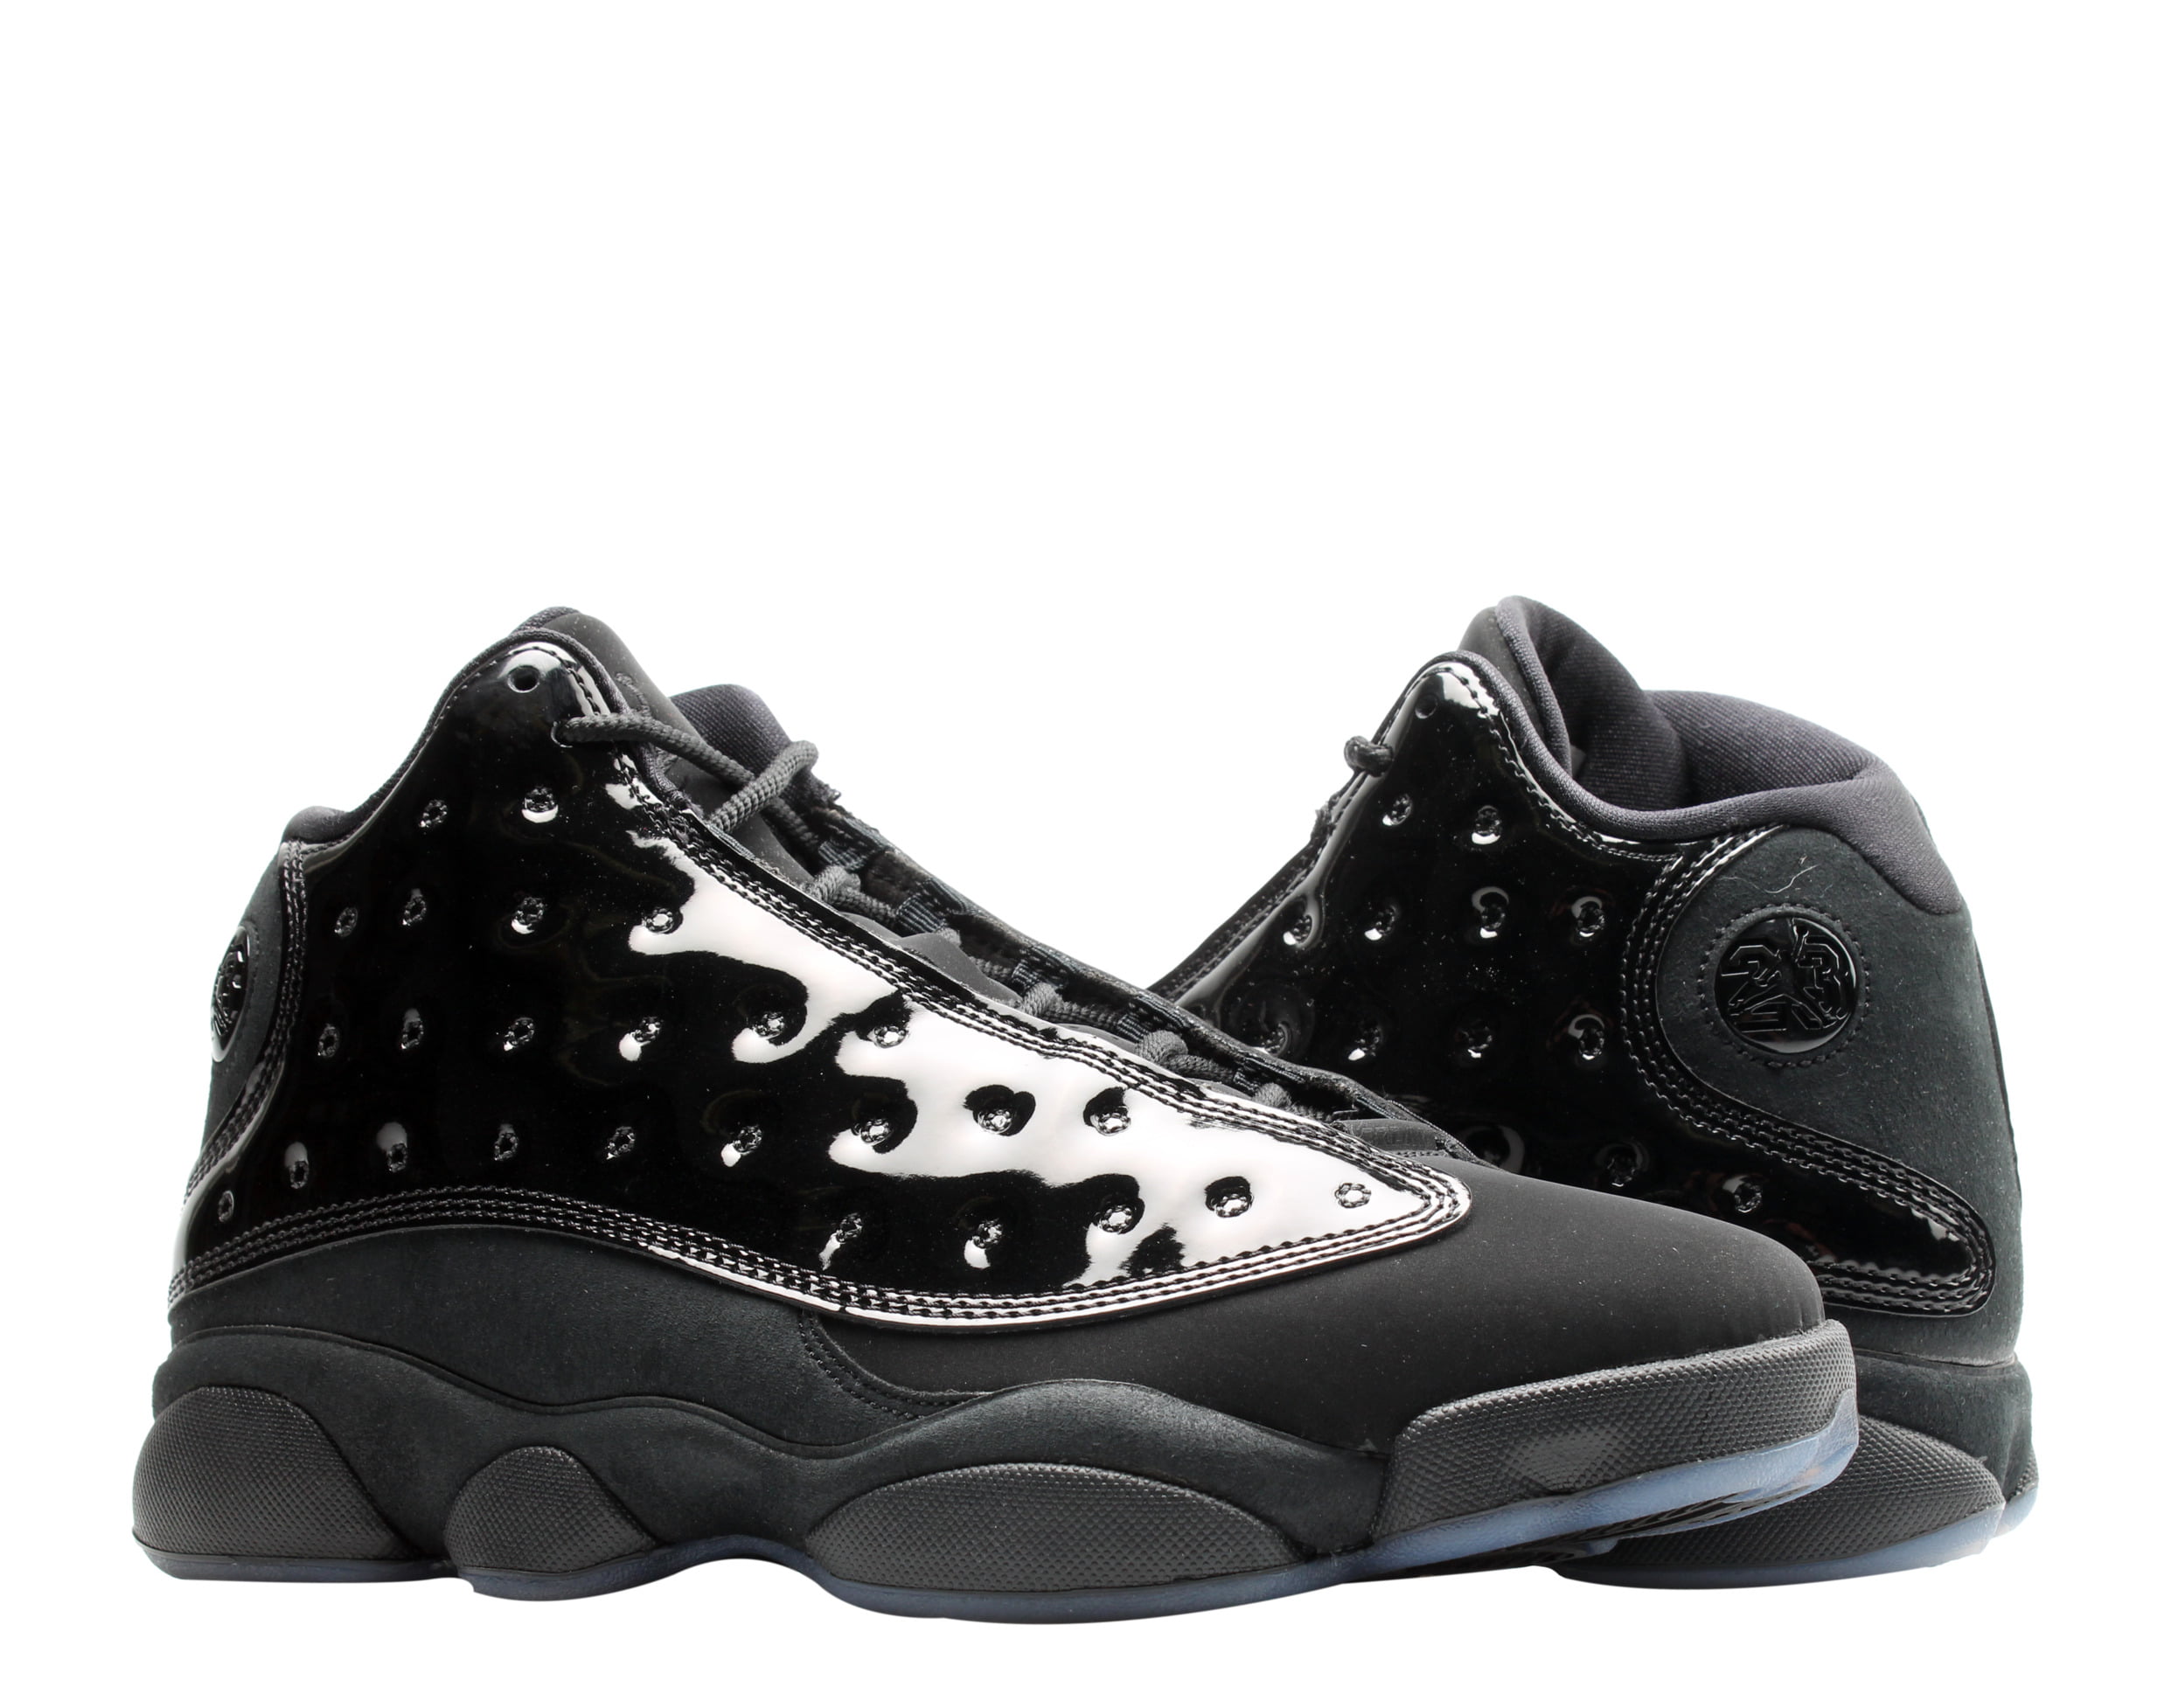 Basketball Shoes Size 10.5 - Walmart 